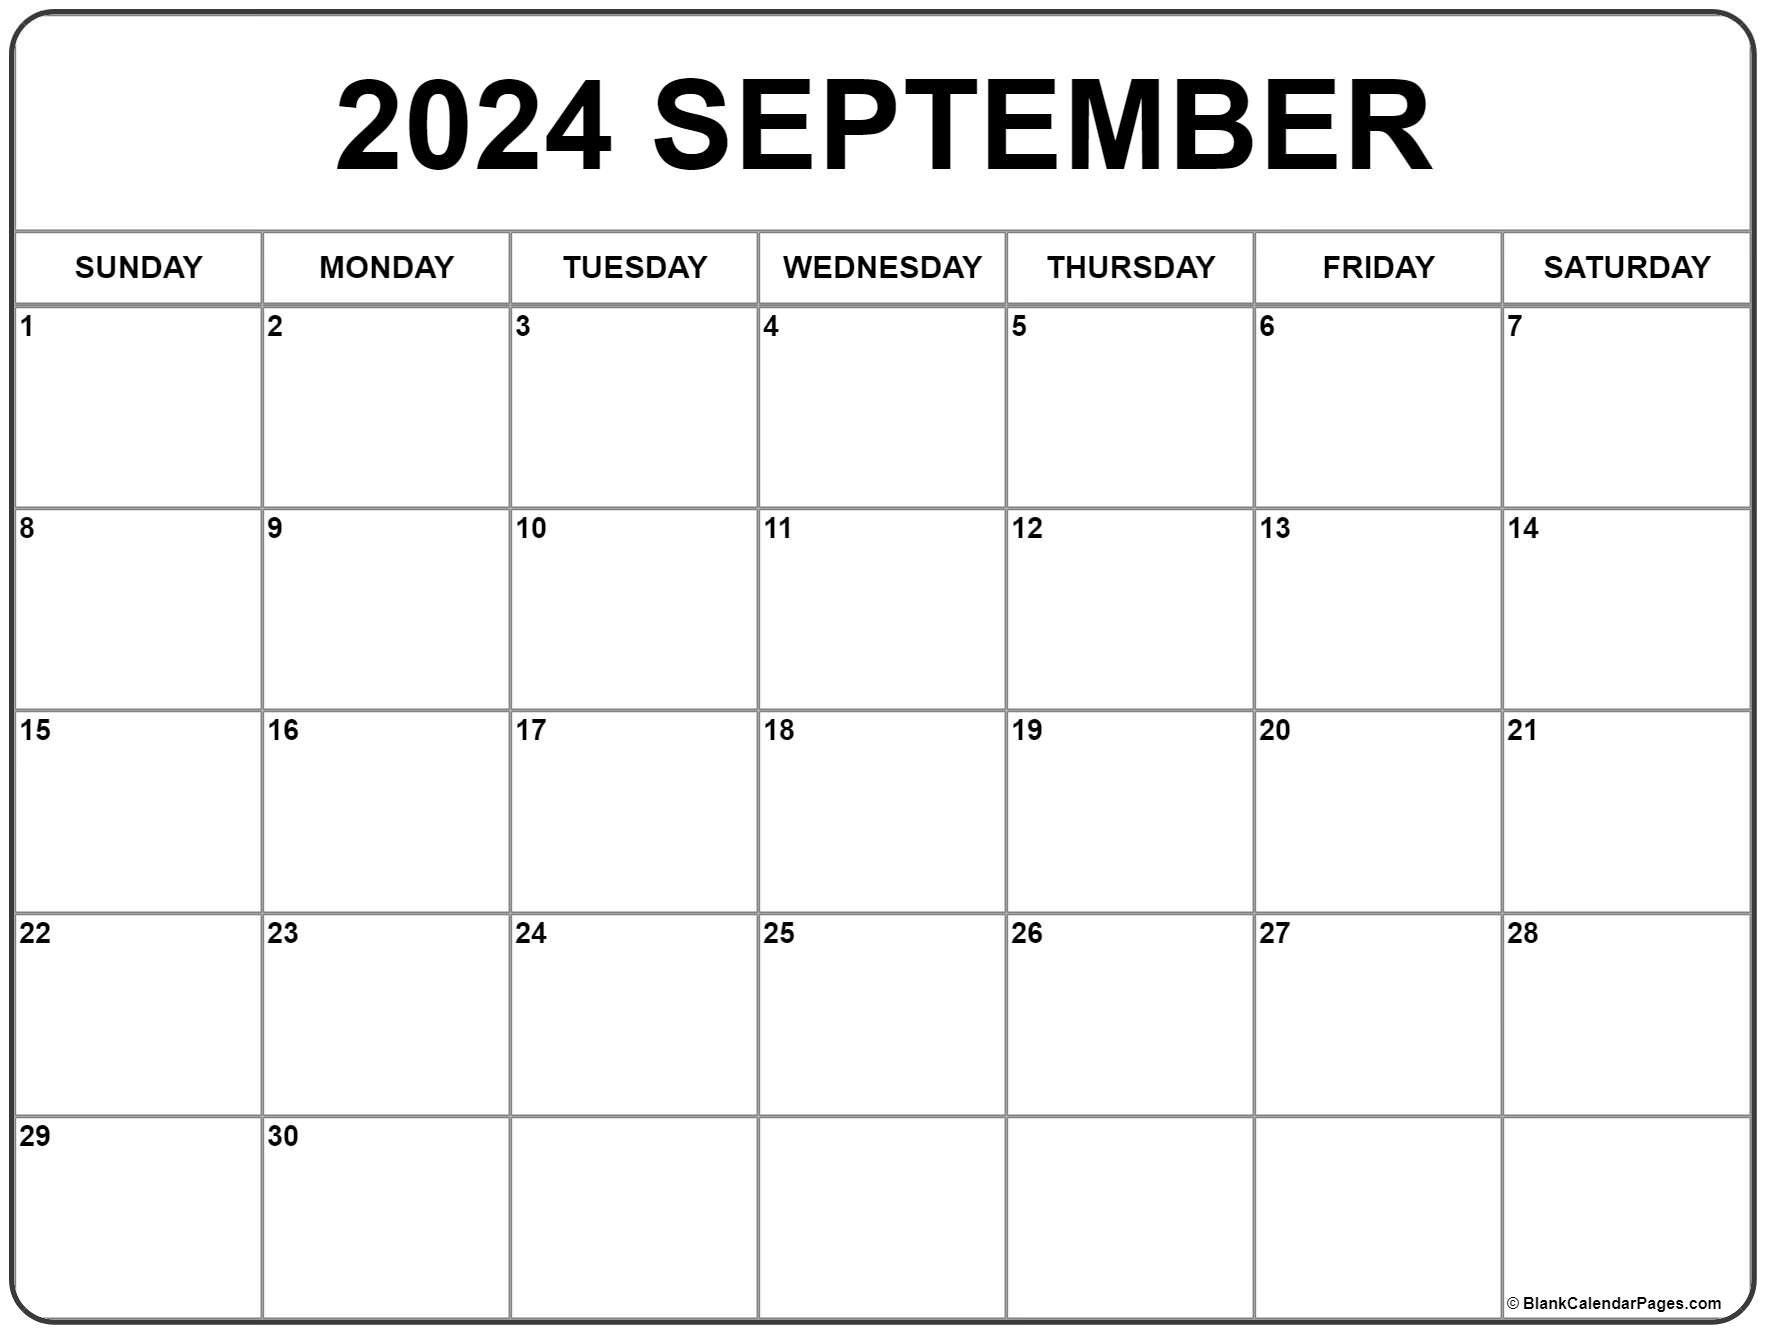 September 2022 Monthly Calendar September 2022 Calendar | Free Printable Calendar Templates